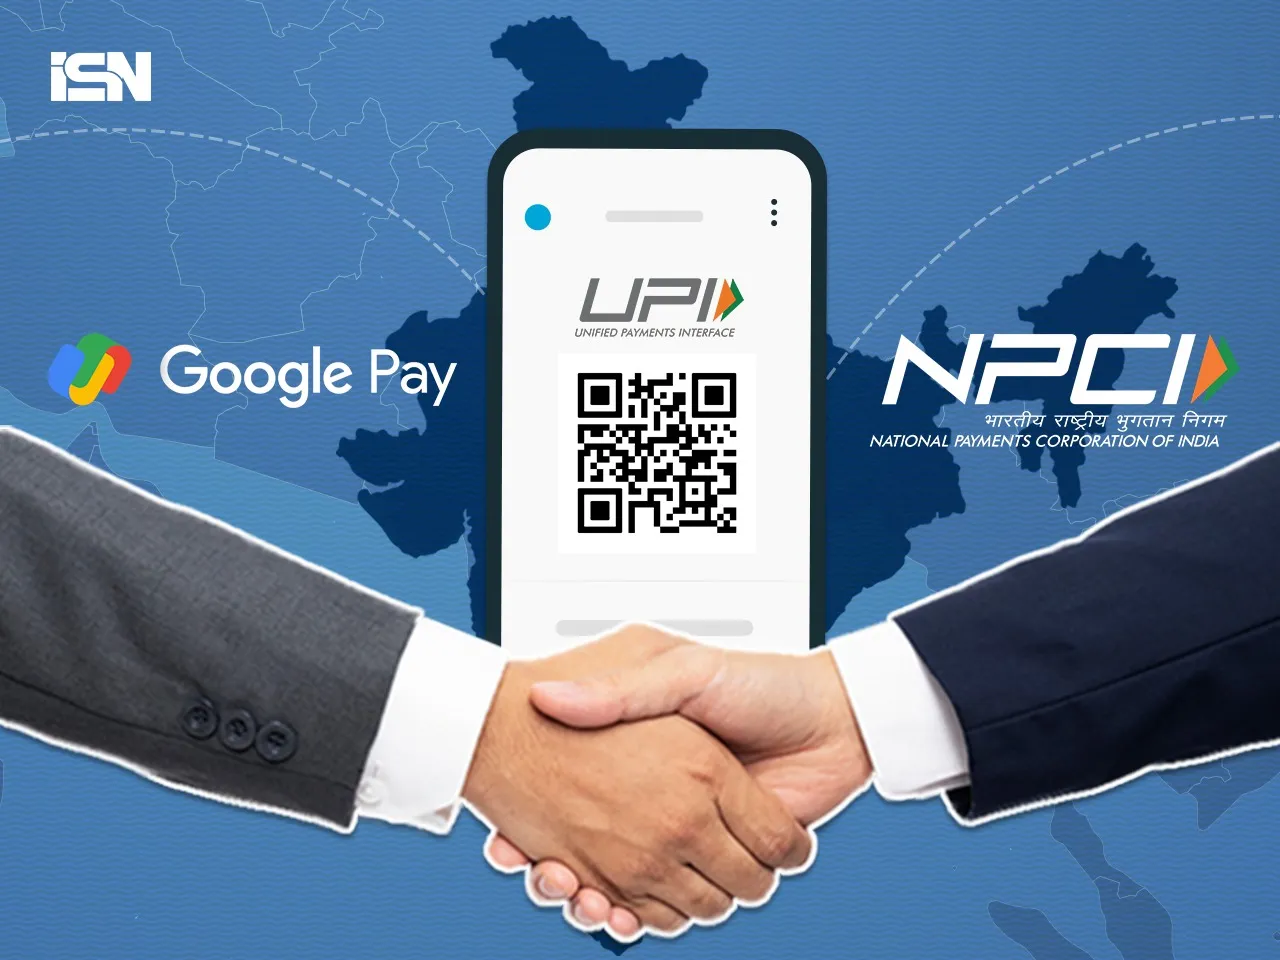 Google Pay partners with NPCI